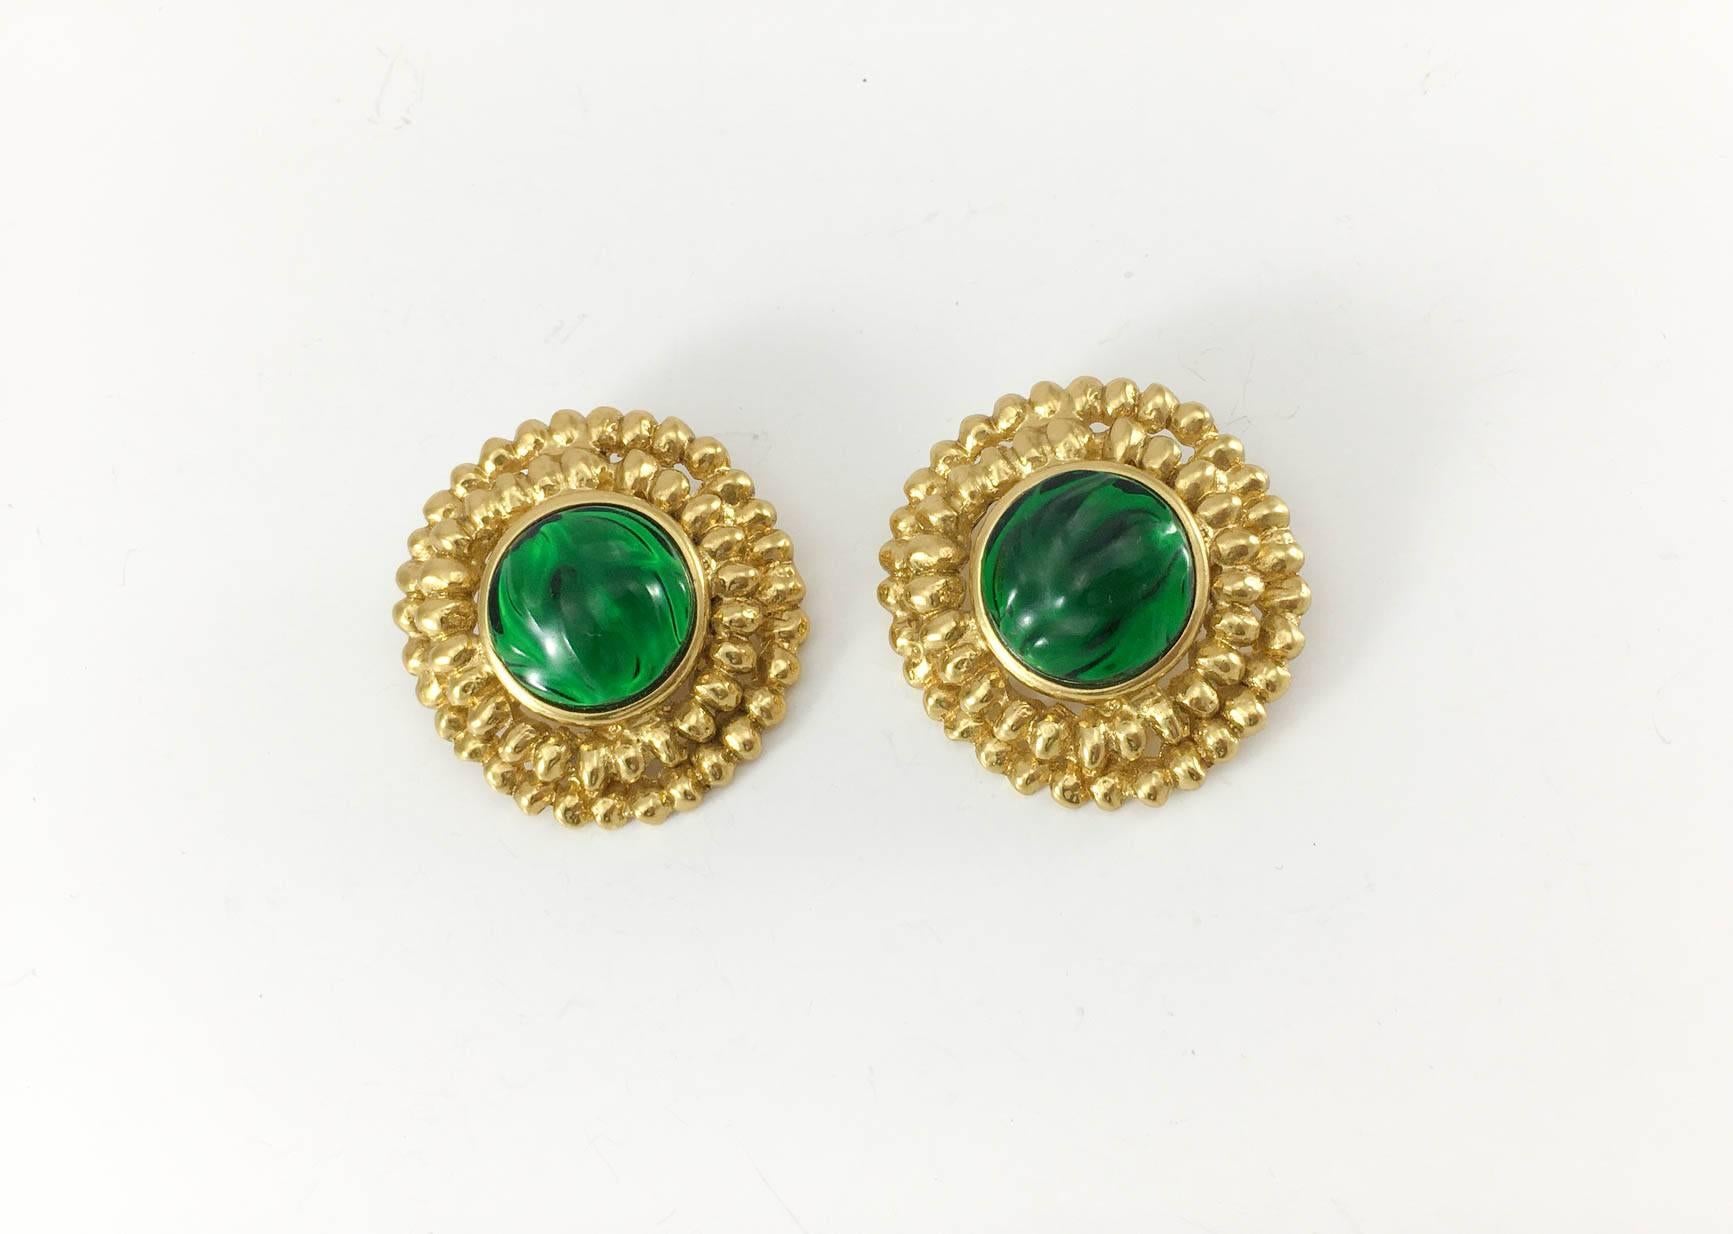 Women's Yves Saint Laurent Green Gripoix Gold-Plated Earrings, by Goossens - 1980s